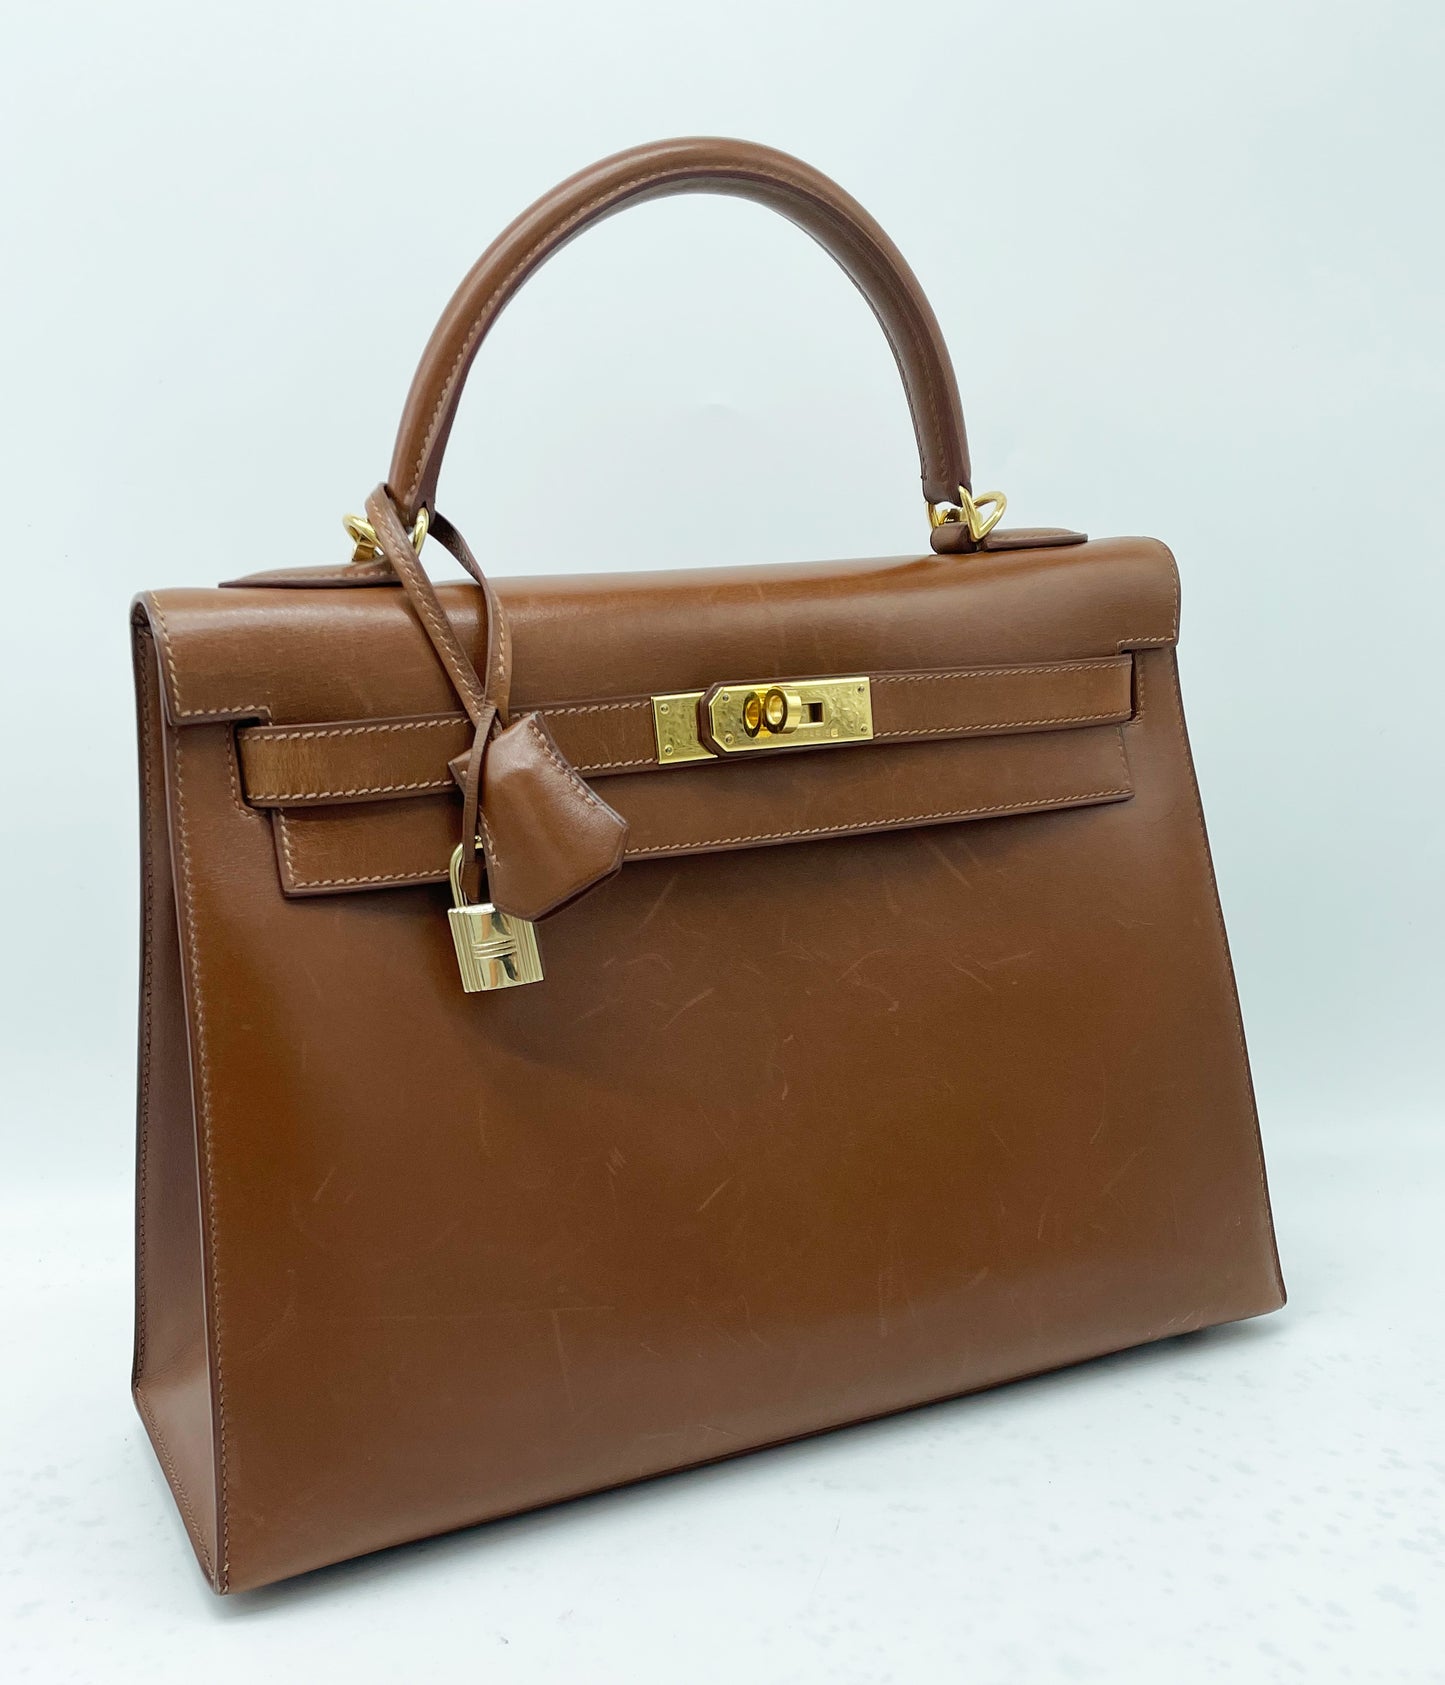 Hermes Kelly bag in hazelnut box leather 32cm